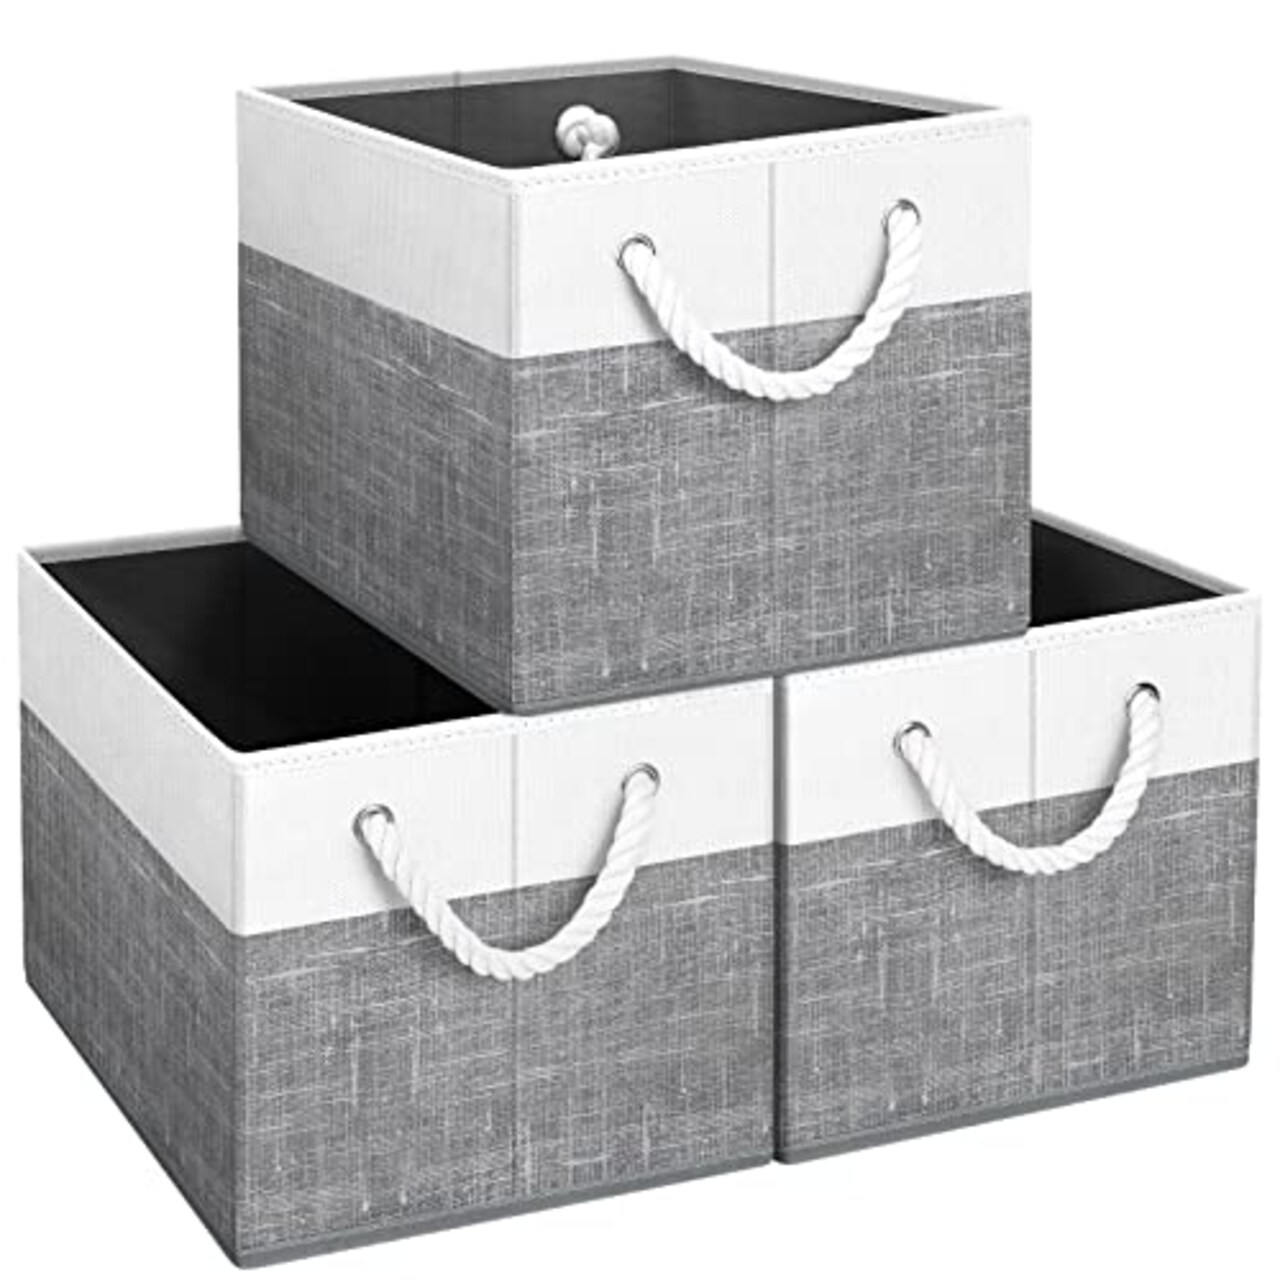 Fab totes Storage Bins [3-Pack], Foldable Storage Baskets for Organizing  Toys, Books, Shelves, Closet, Large Storage Box with Rope Handles, Sturdy Organizer  Bins, White & Grey